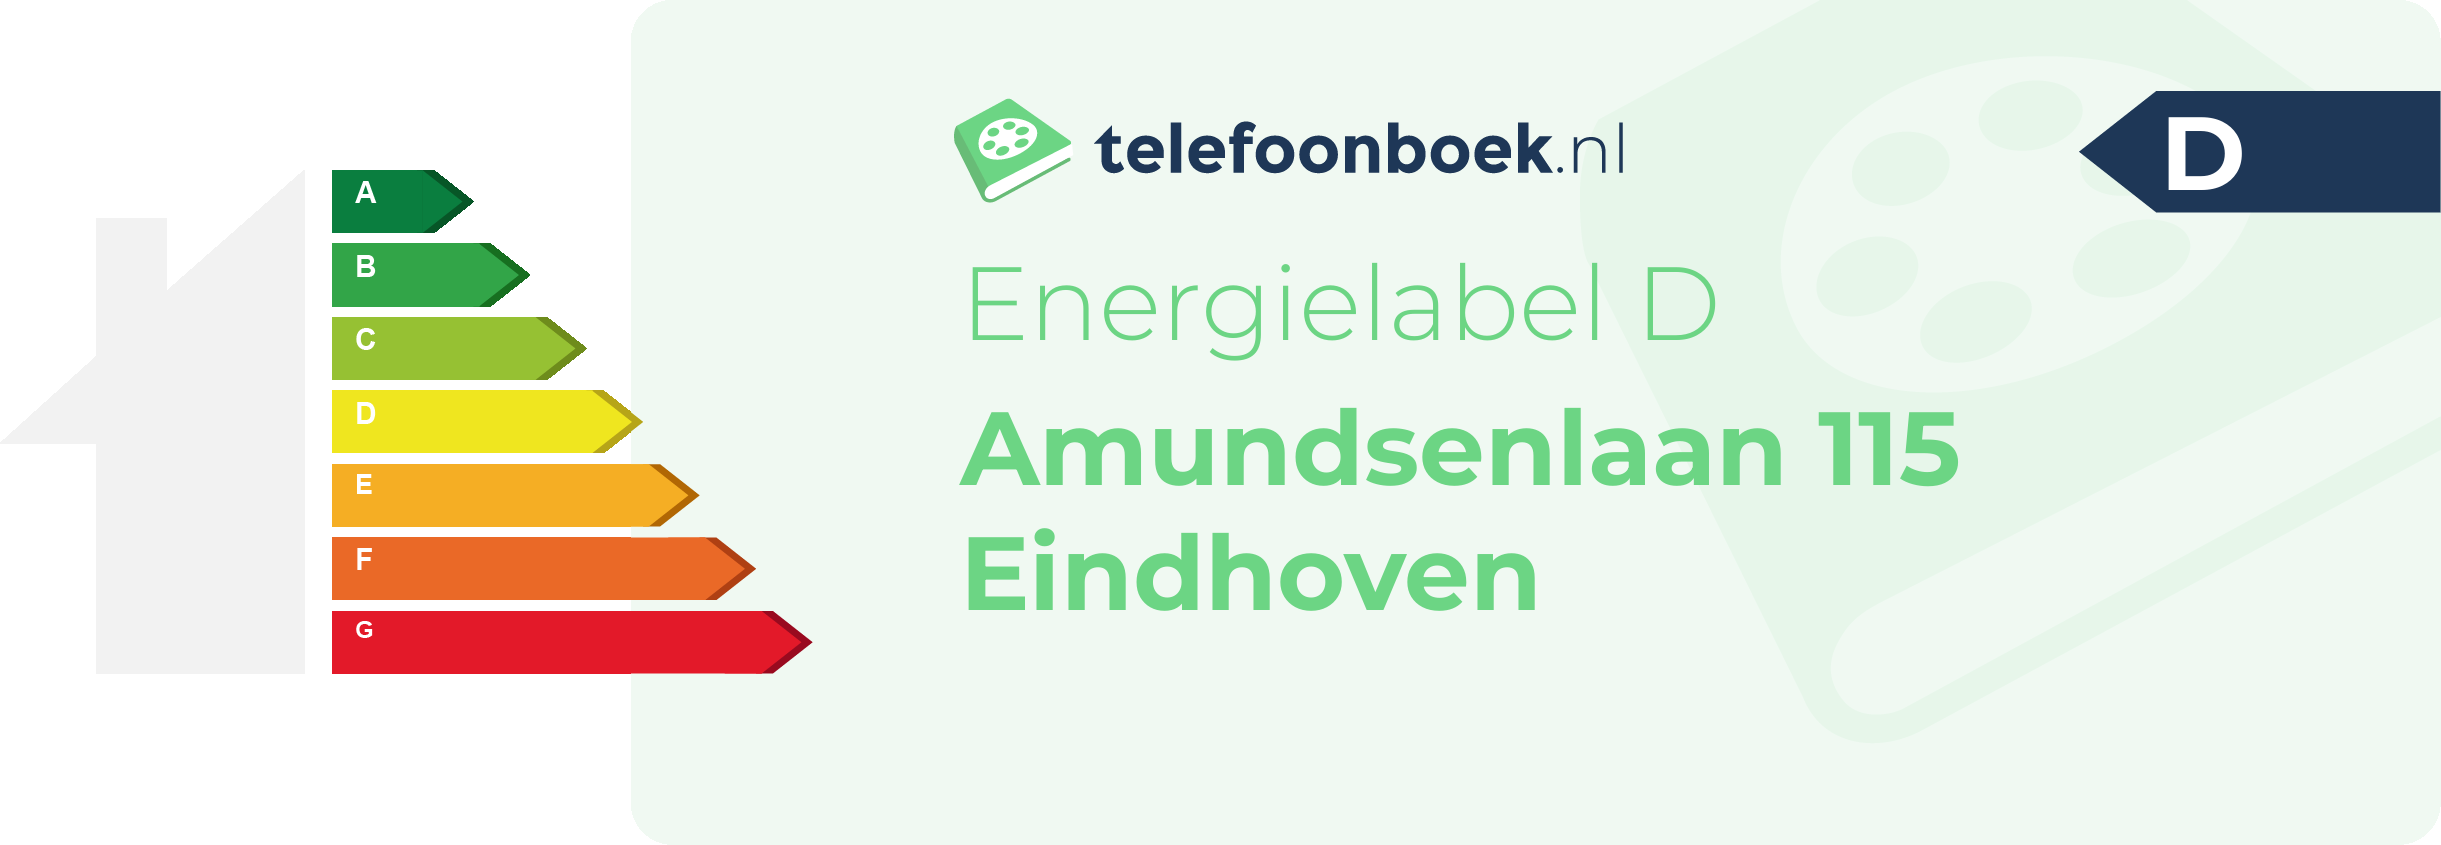 Energielabel Amundsenlaan 115 Eindhoven